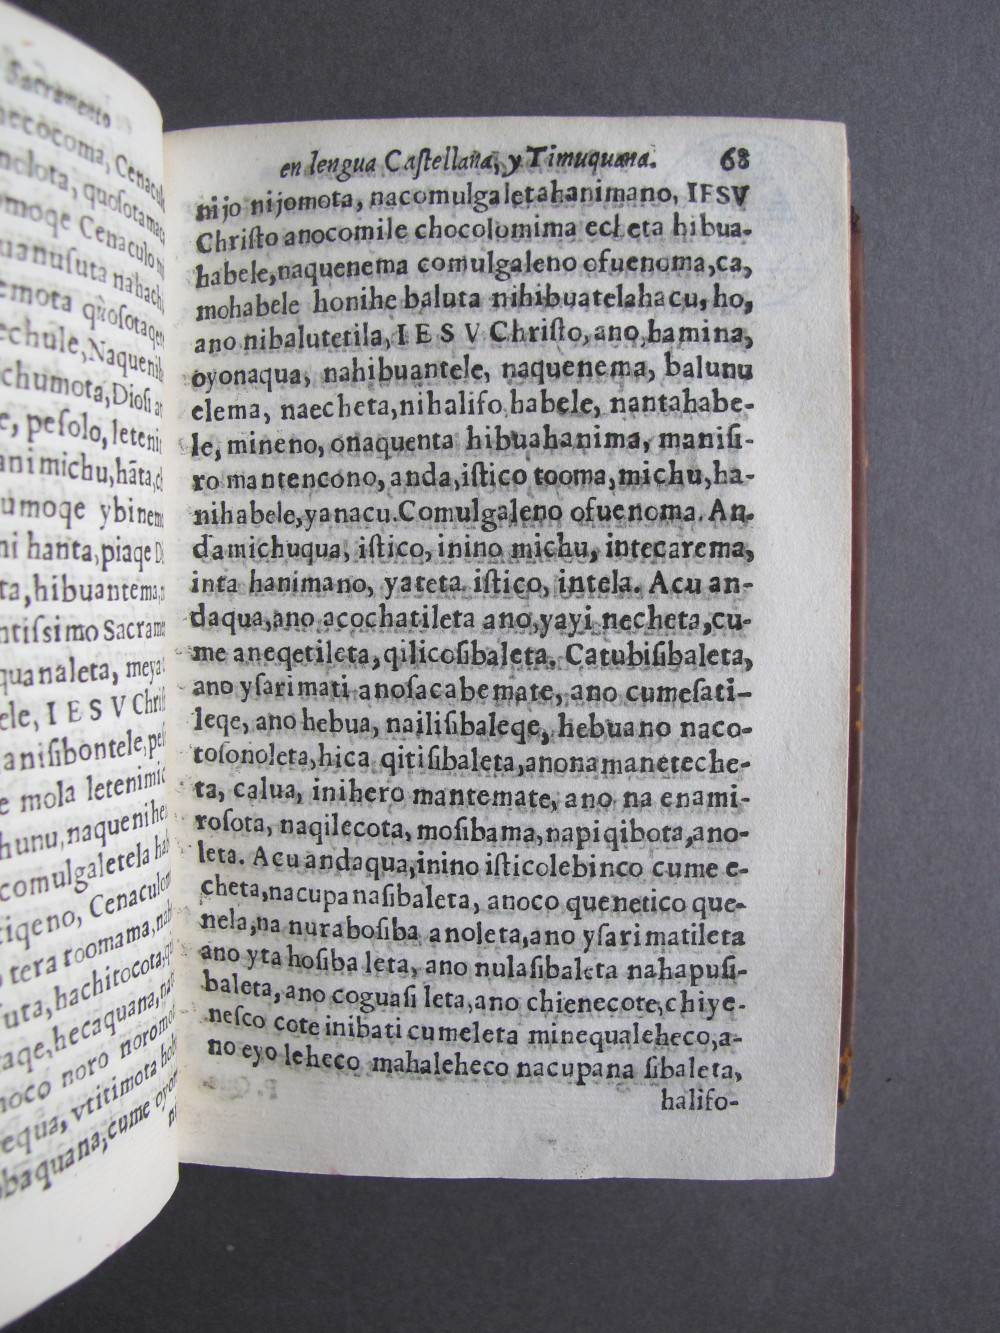 Folio I7 recto